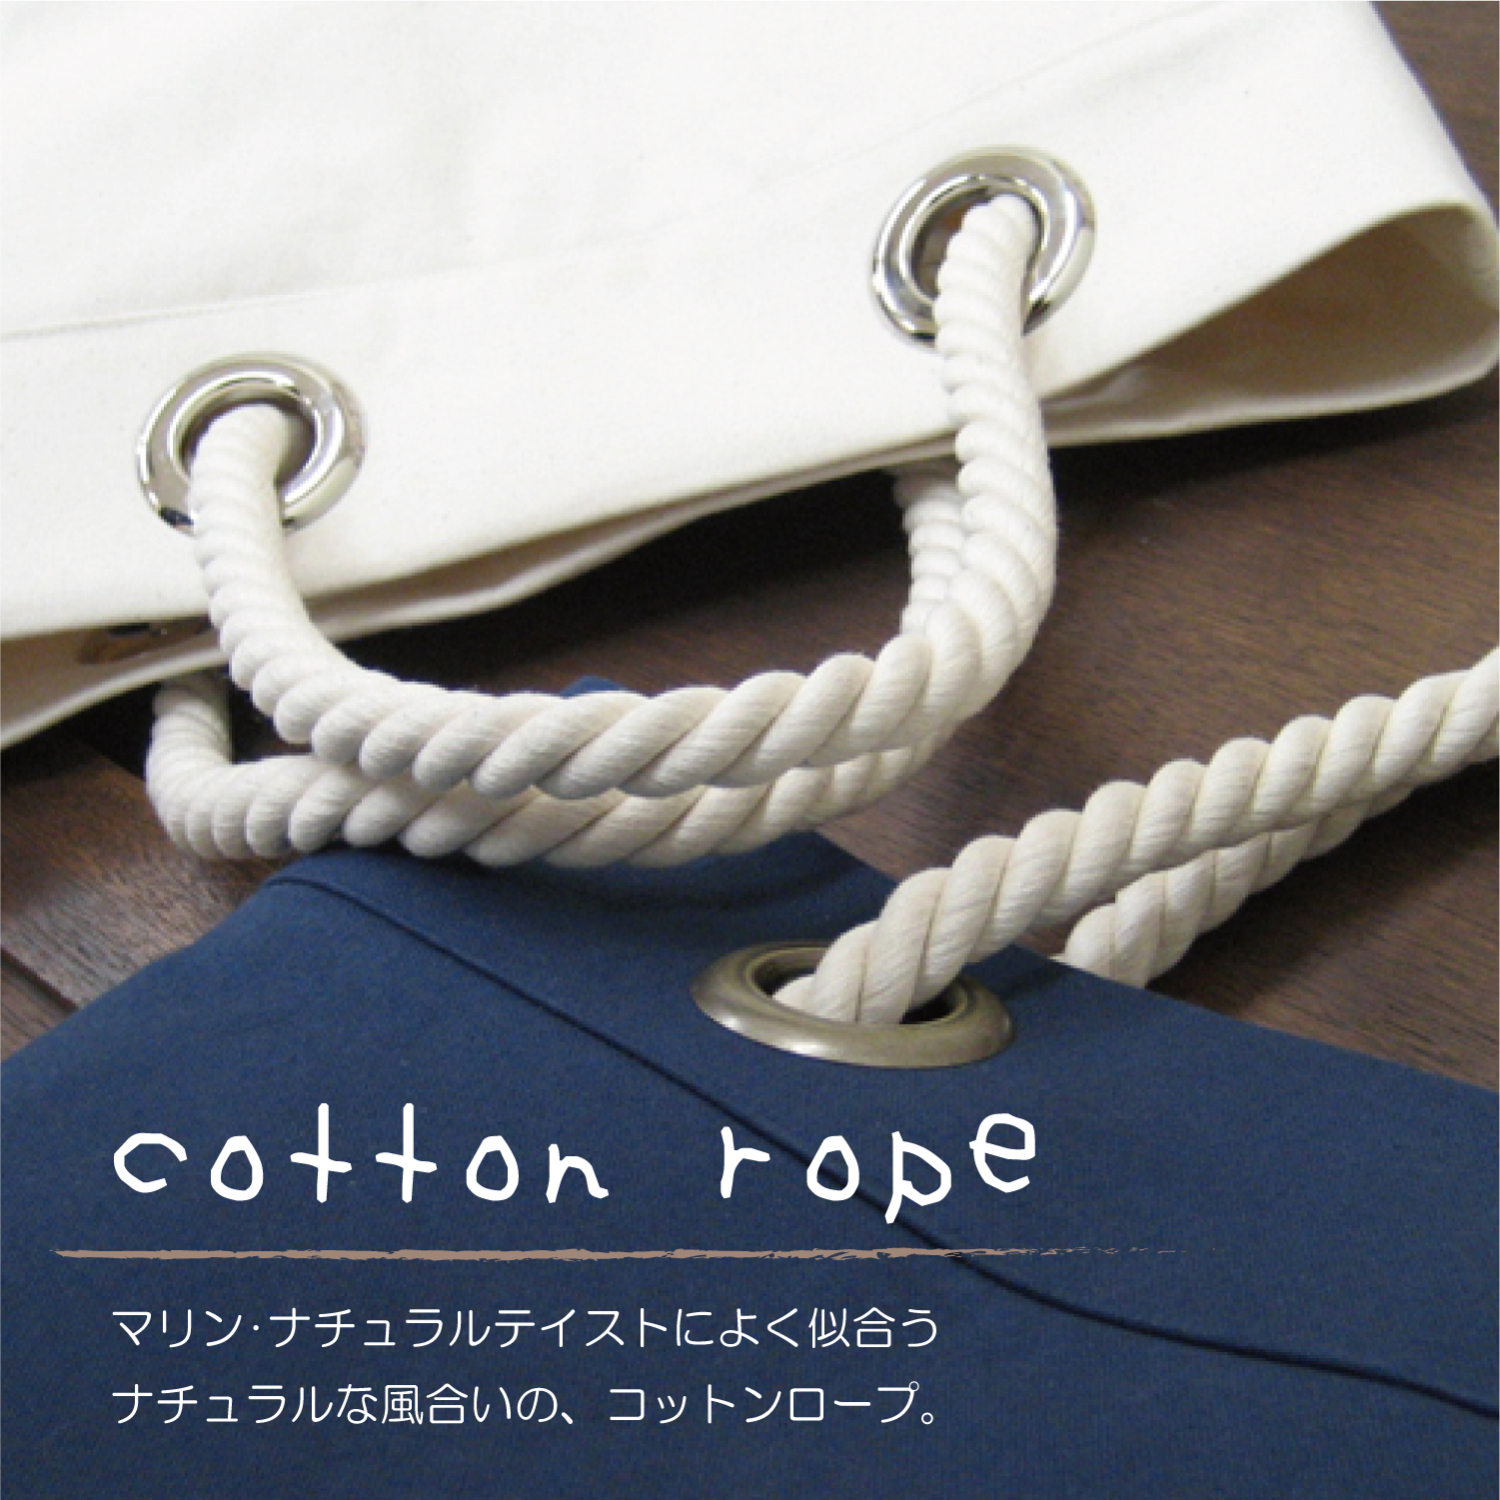 cotton-rope-1.jpg